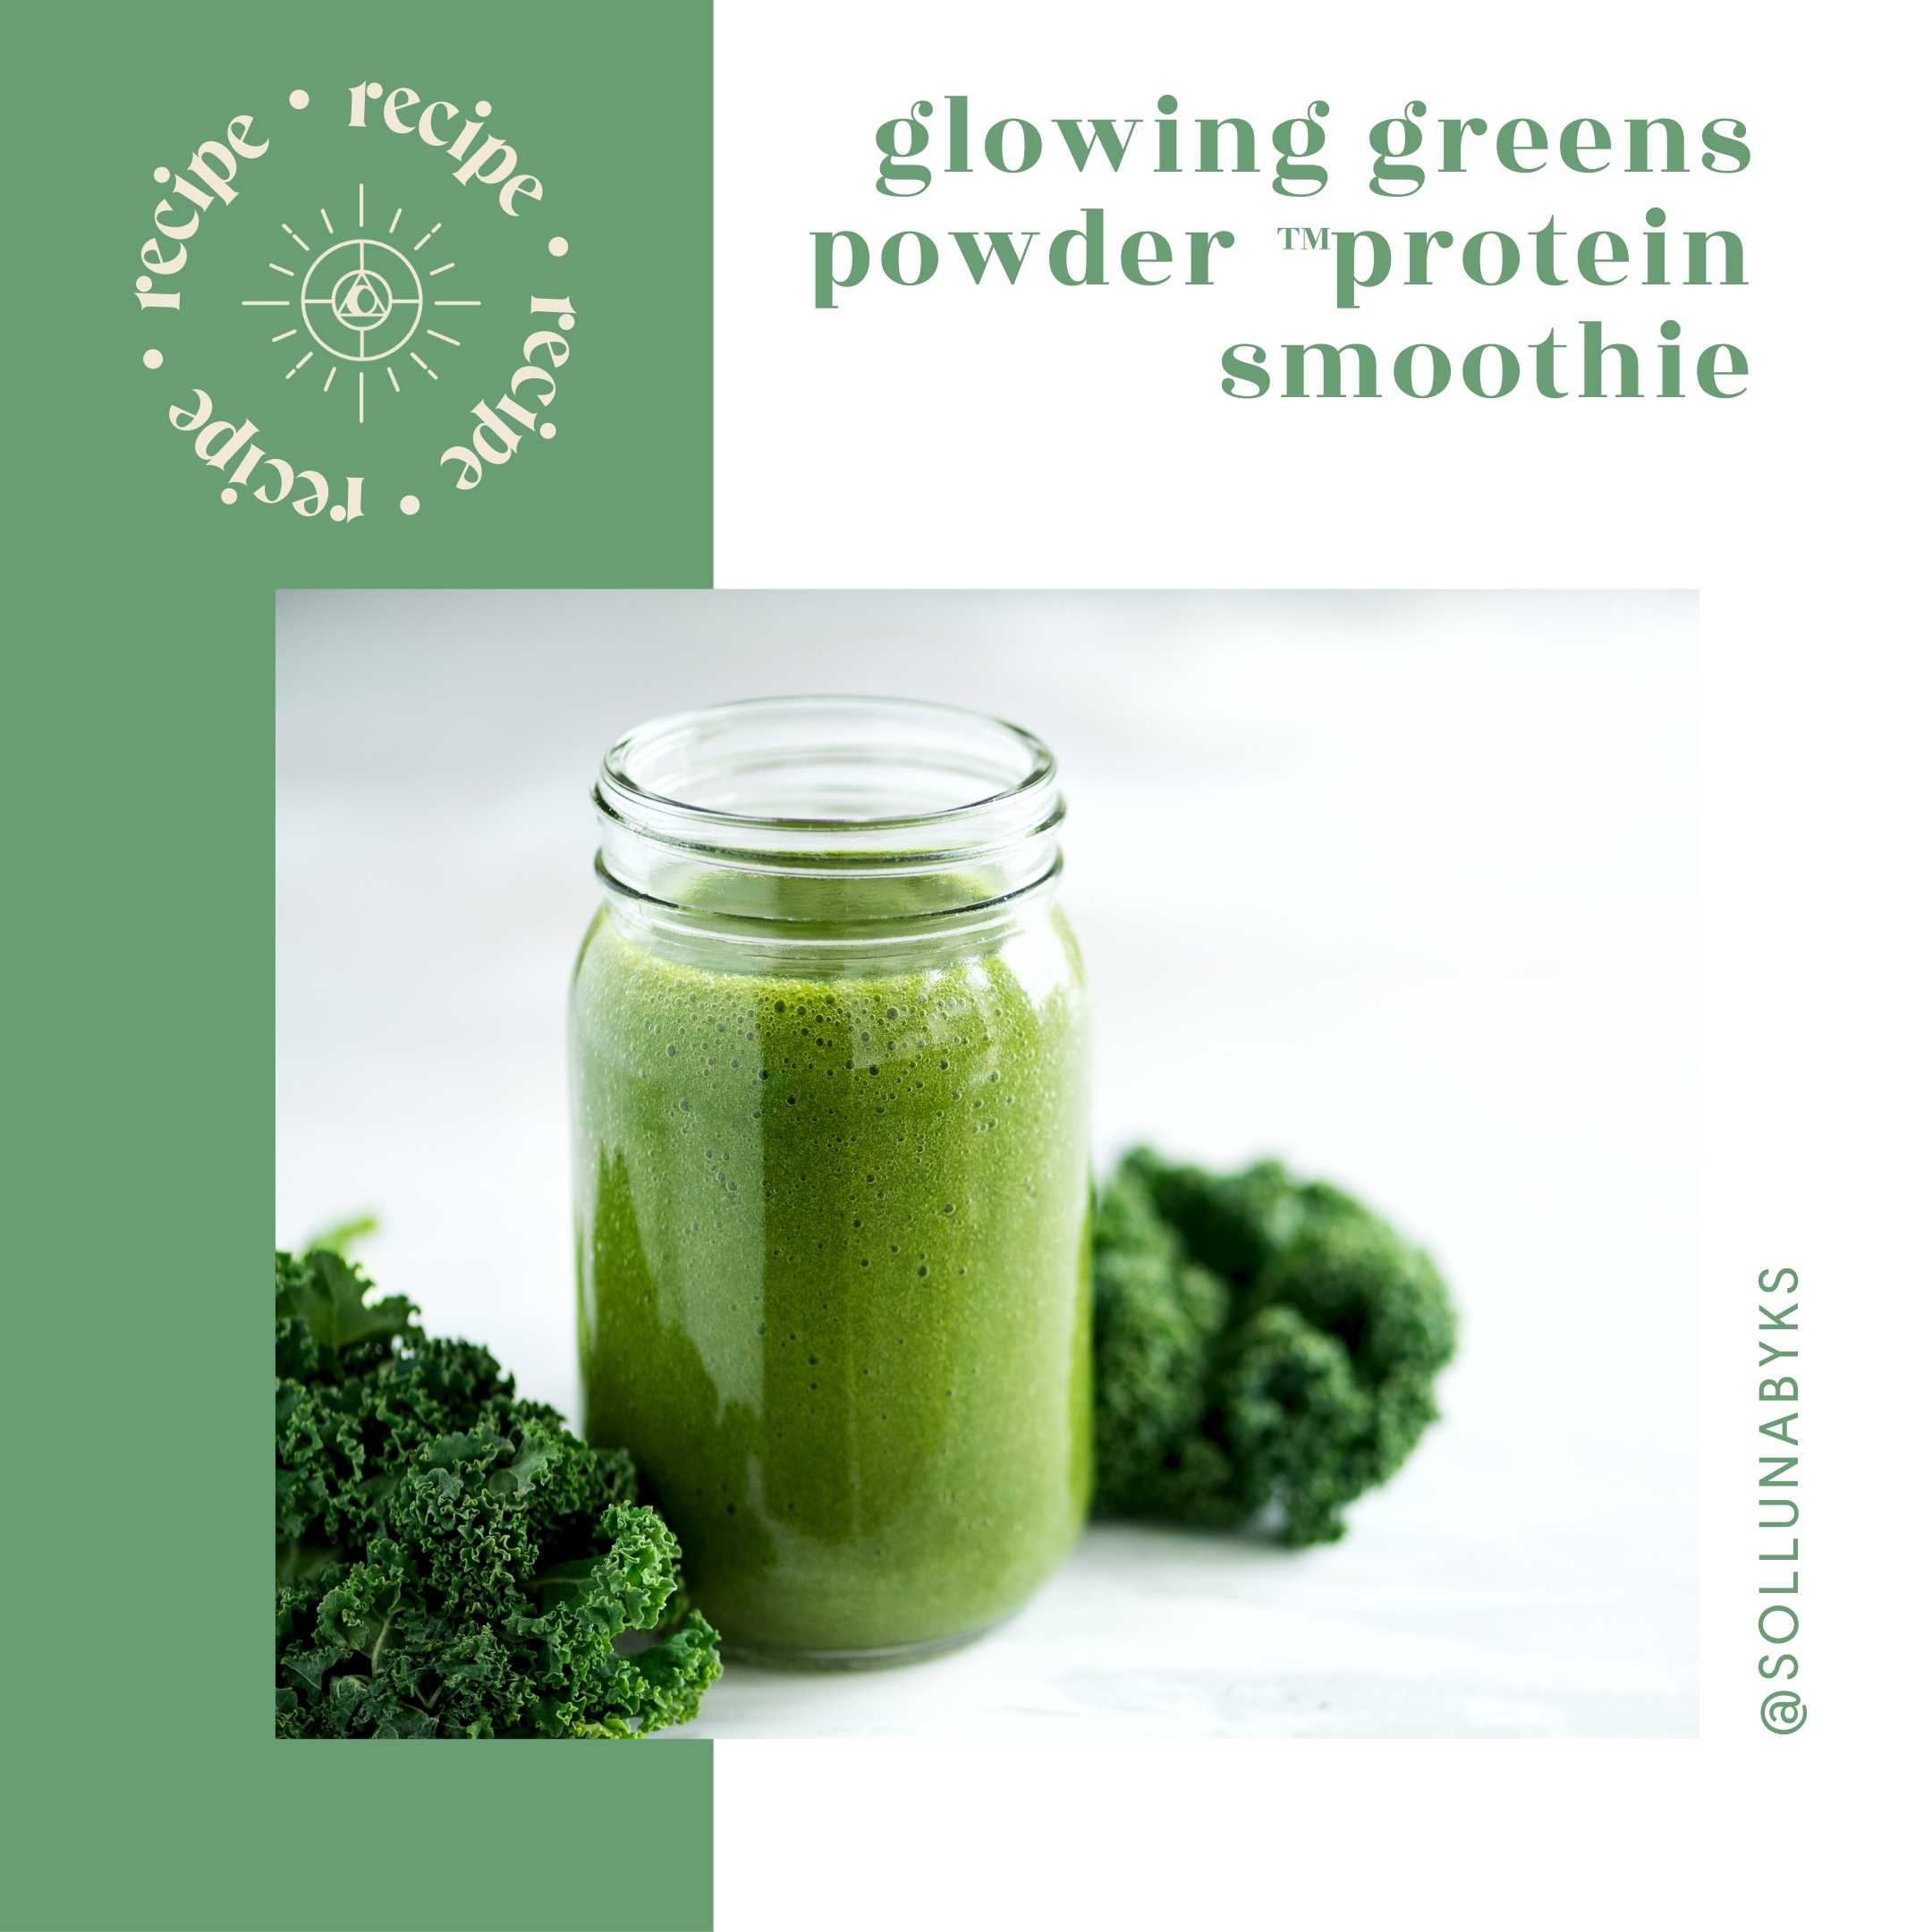 Glowing Greens Powder™ Pure Blend